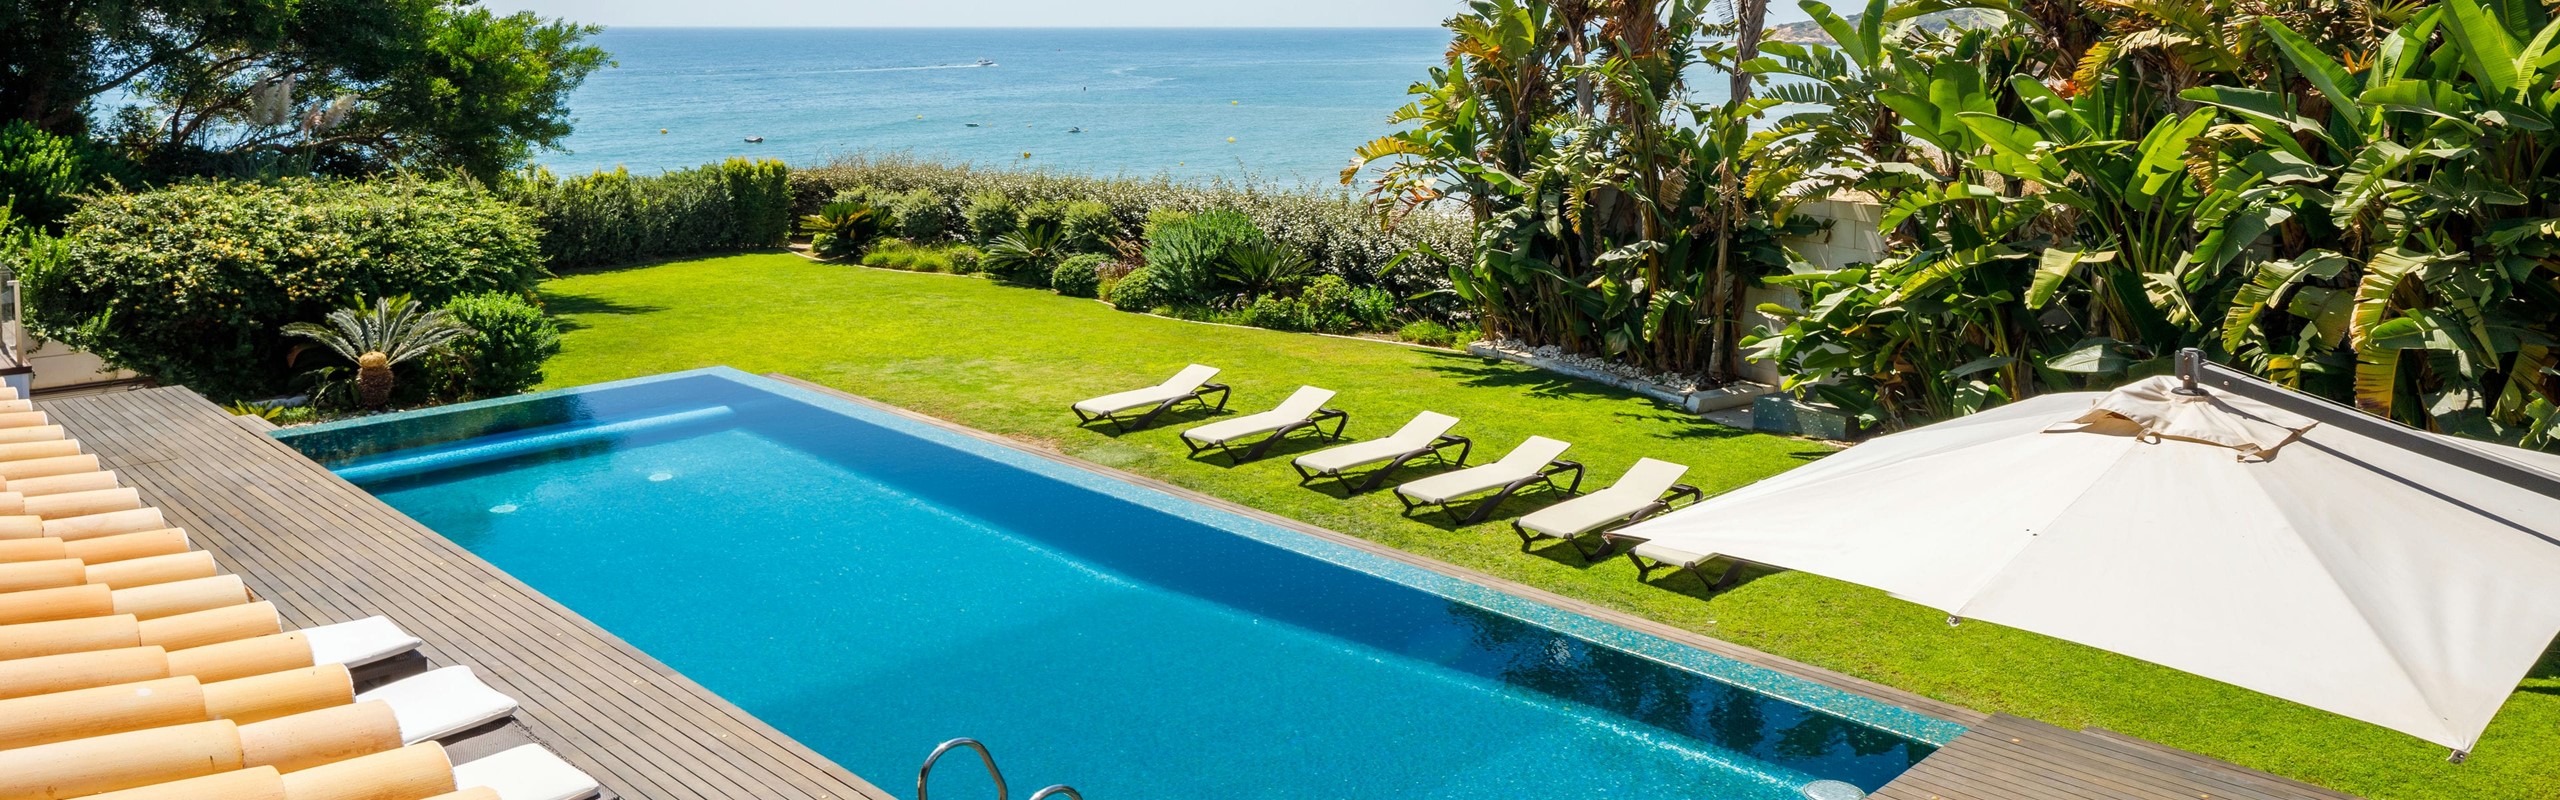 Swimming Pool With Sea Views Algarve